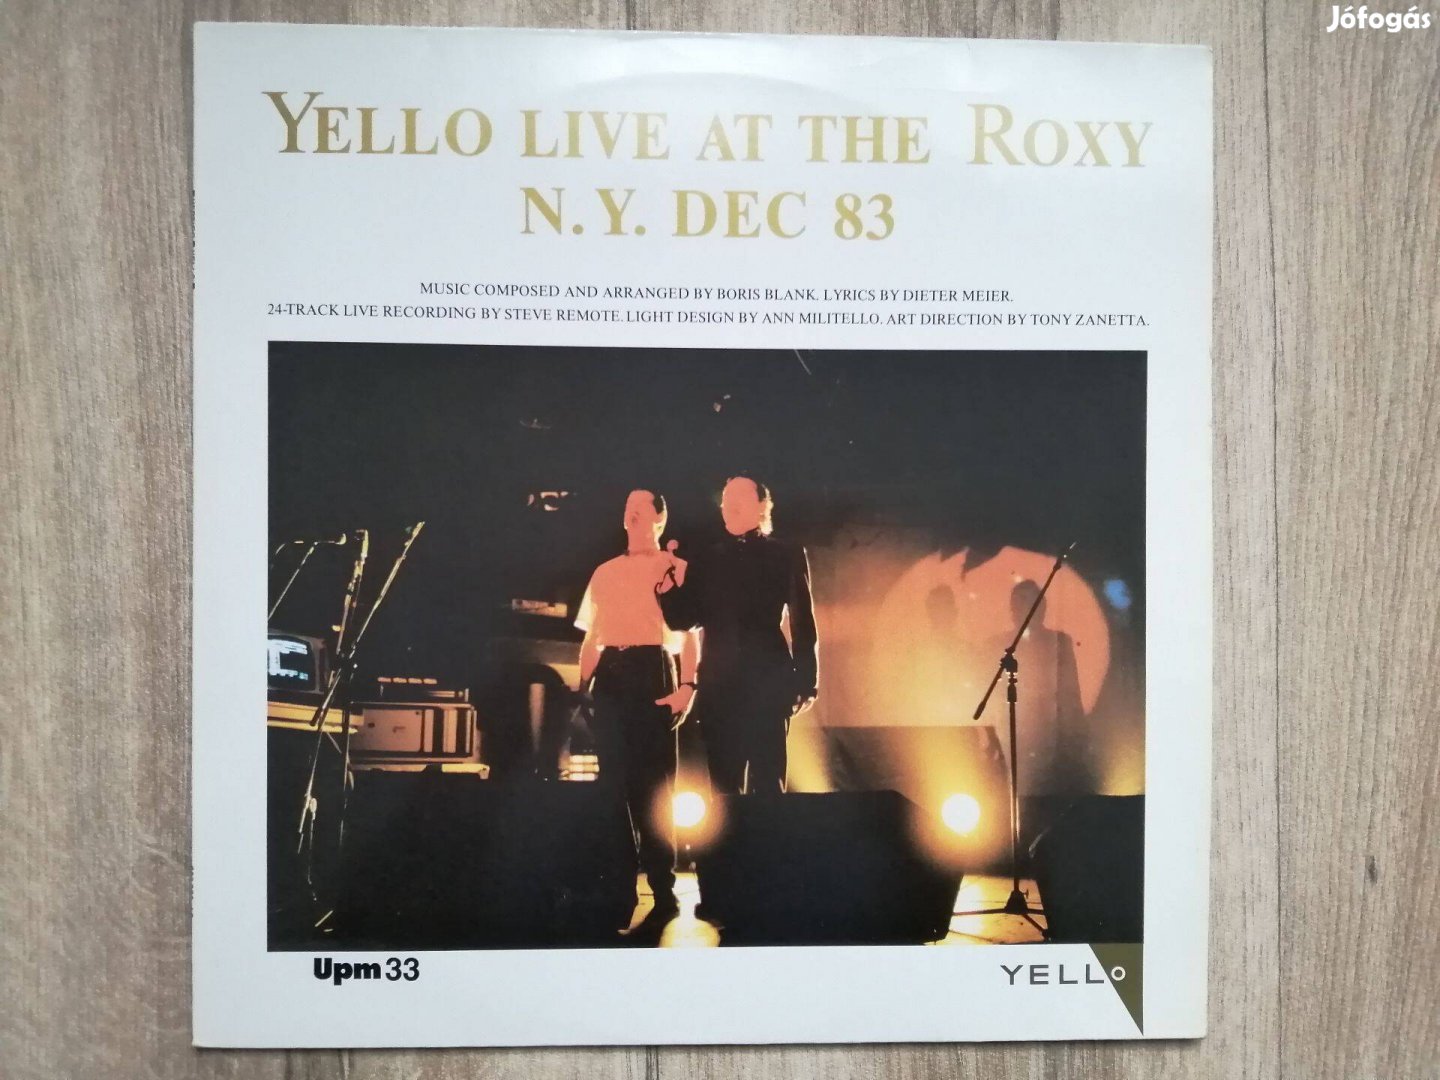 Yello - Live At The Roxy N.Y. Dec 83 LP / 12" német